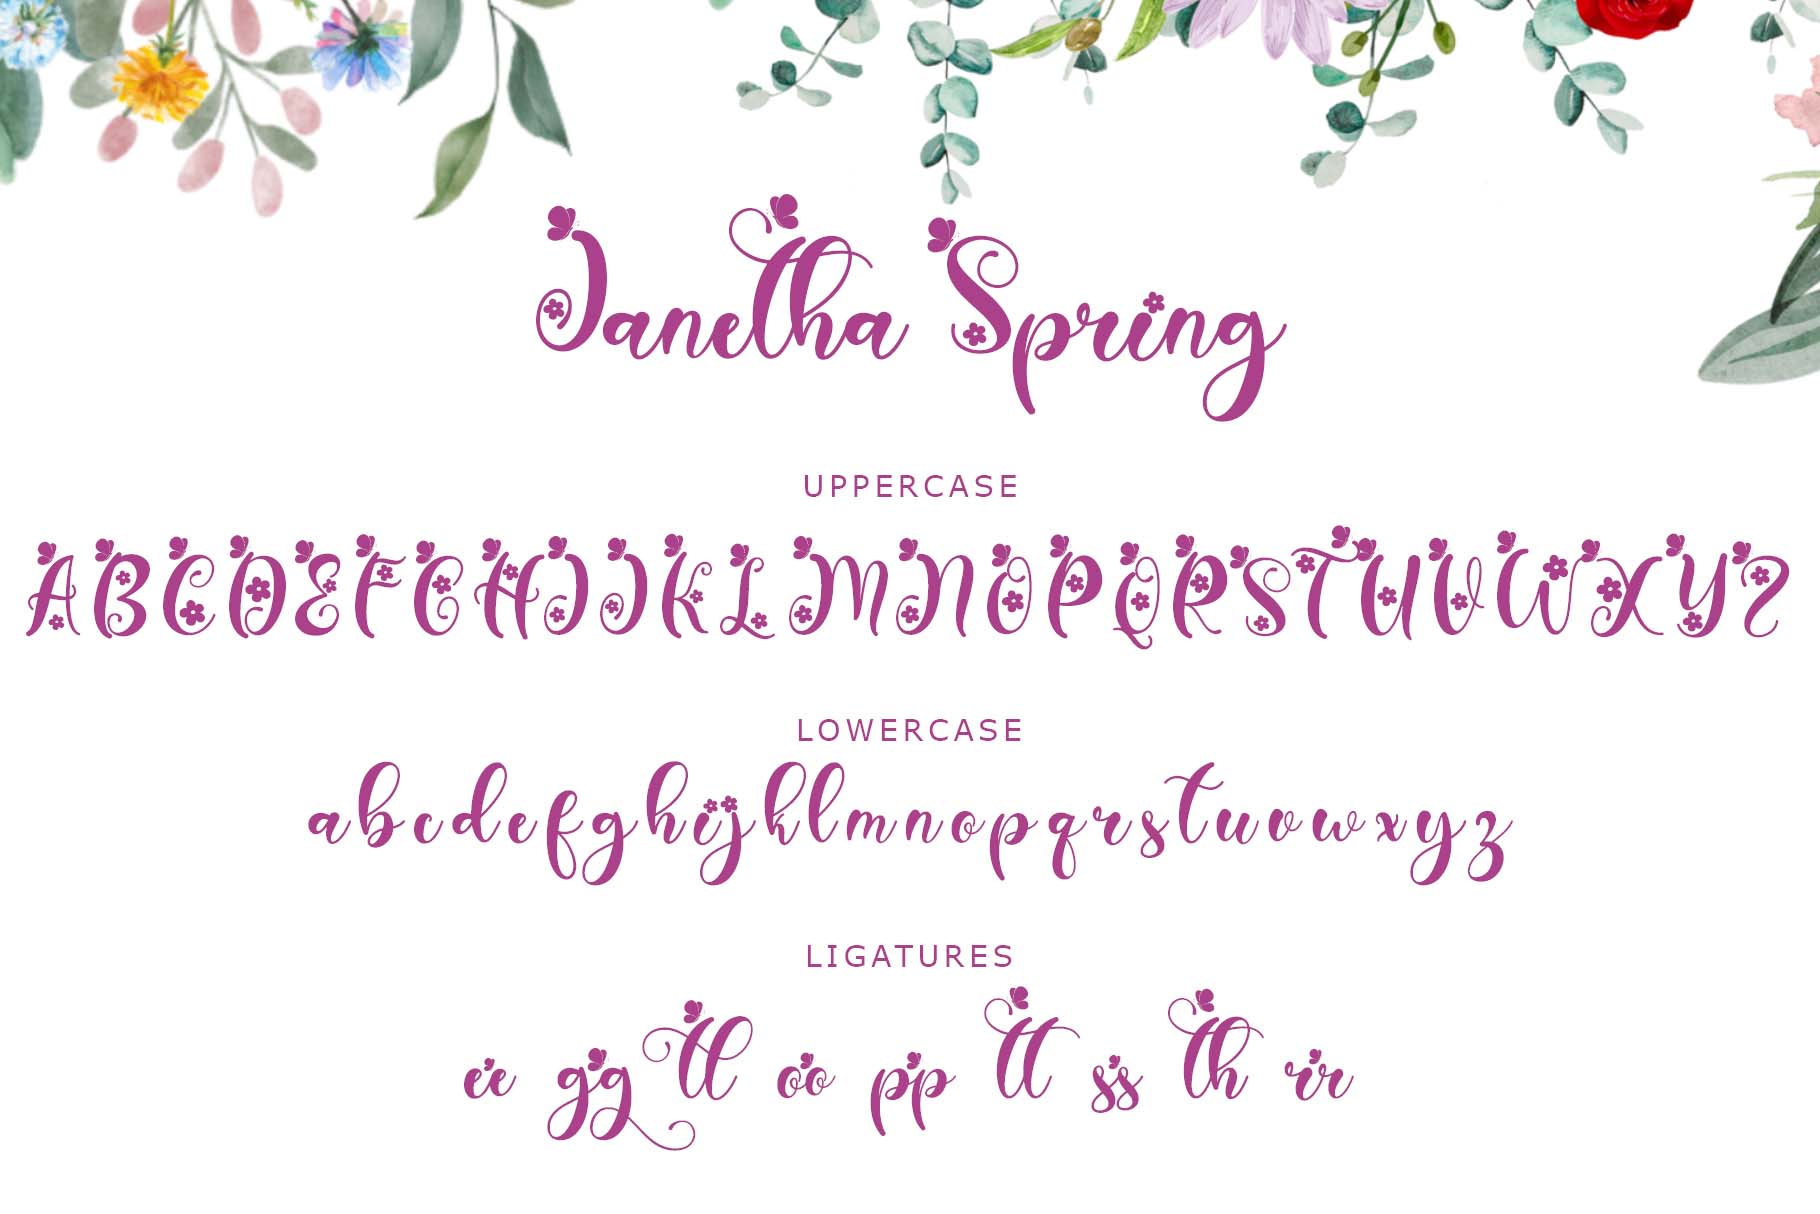 Janetha Spring